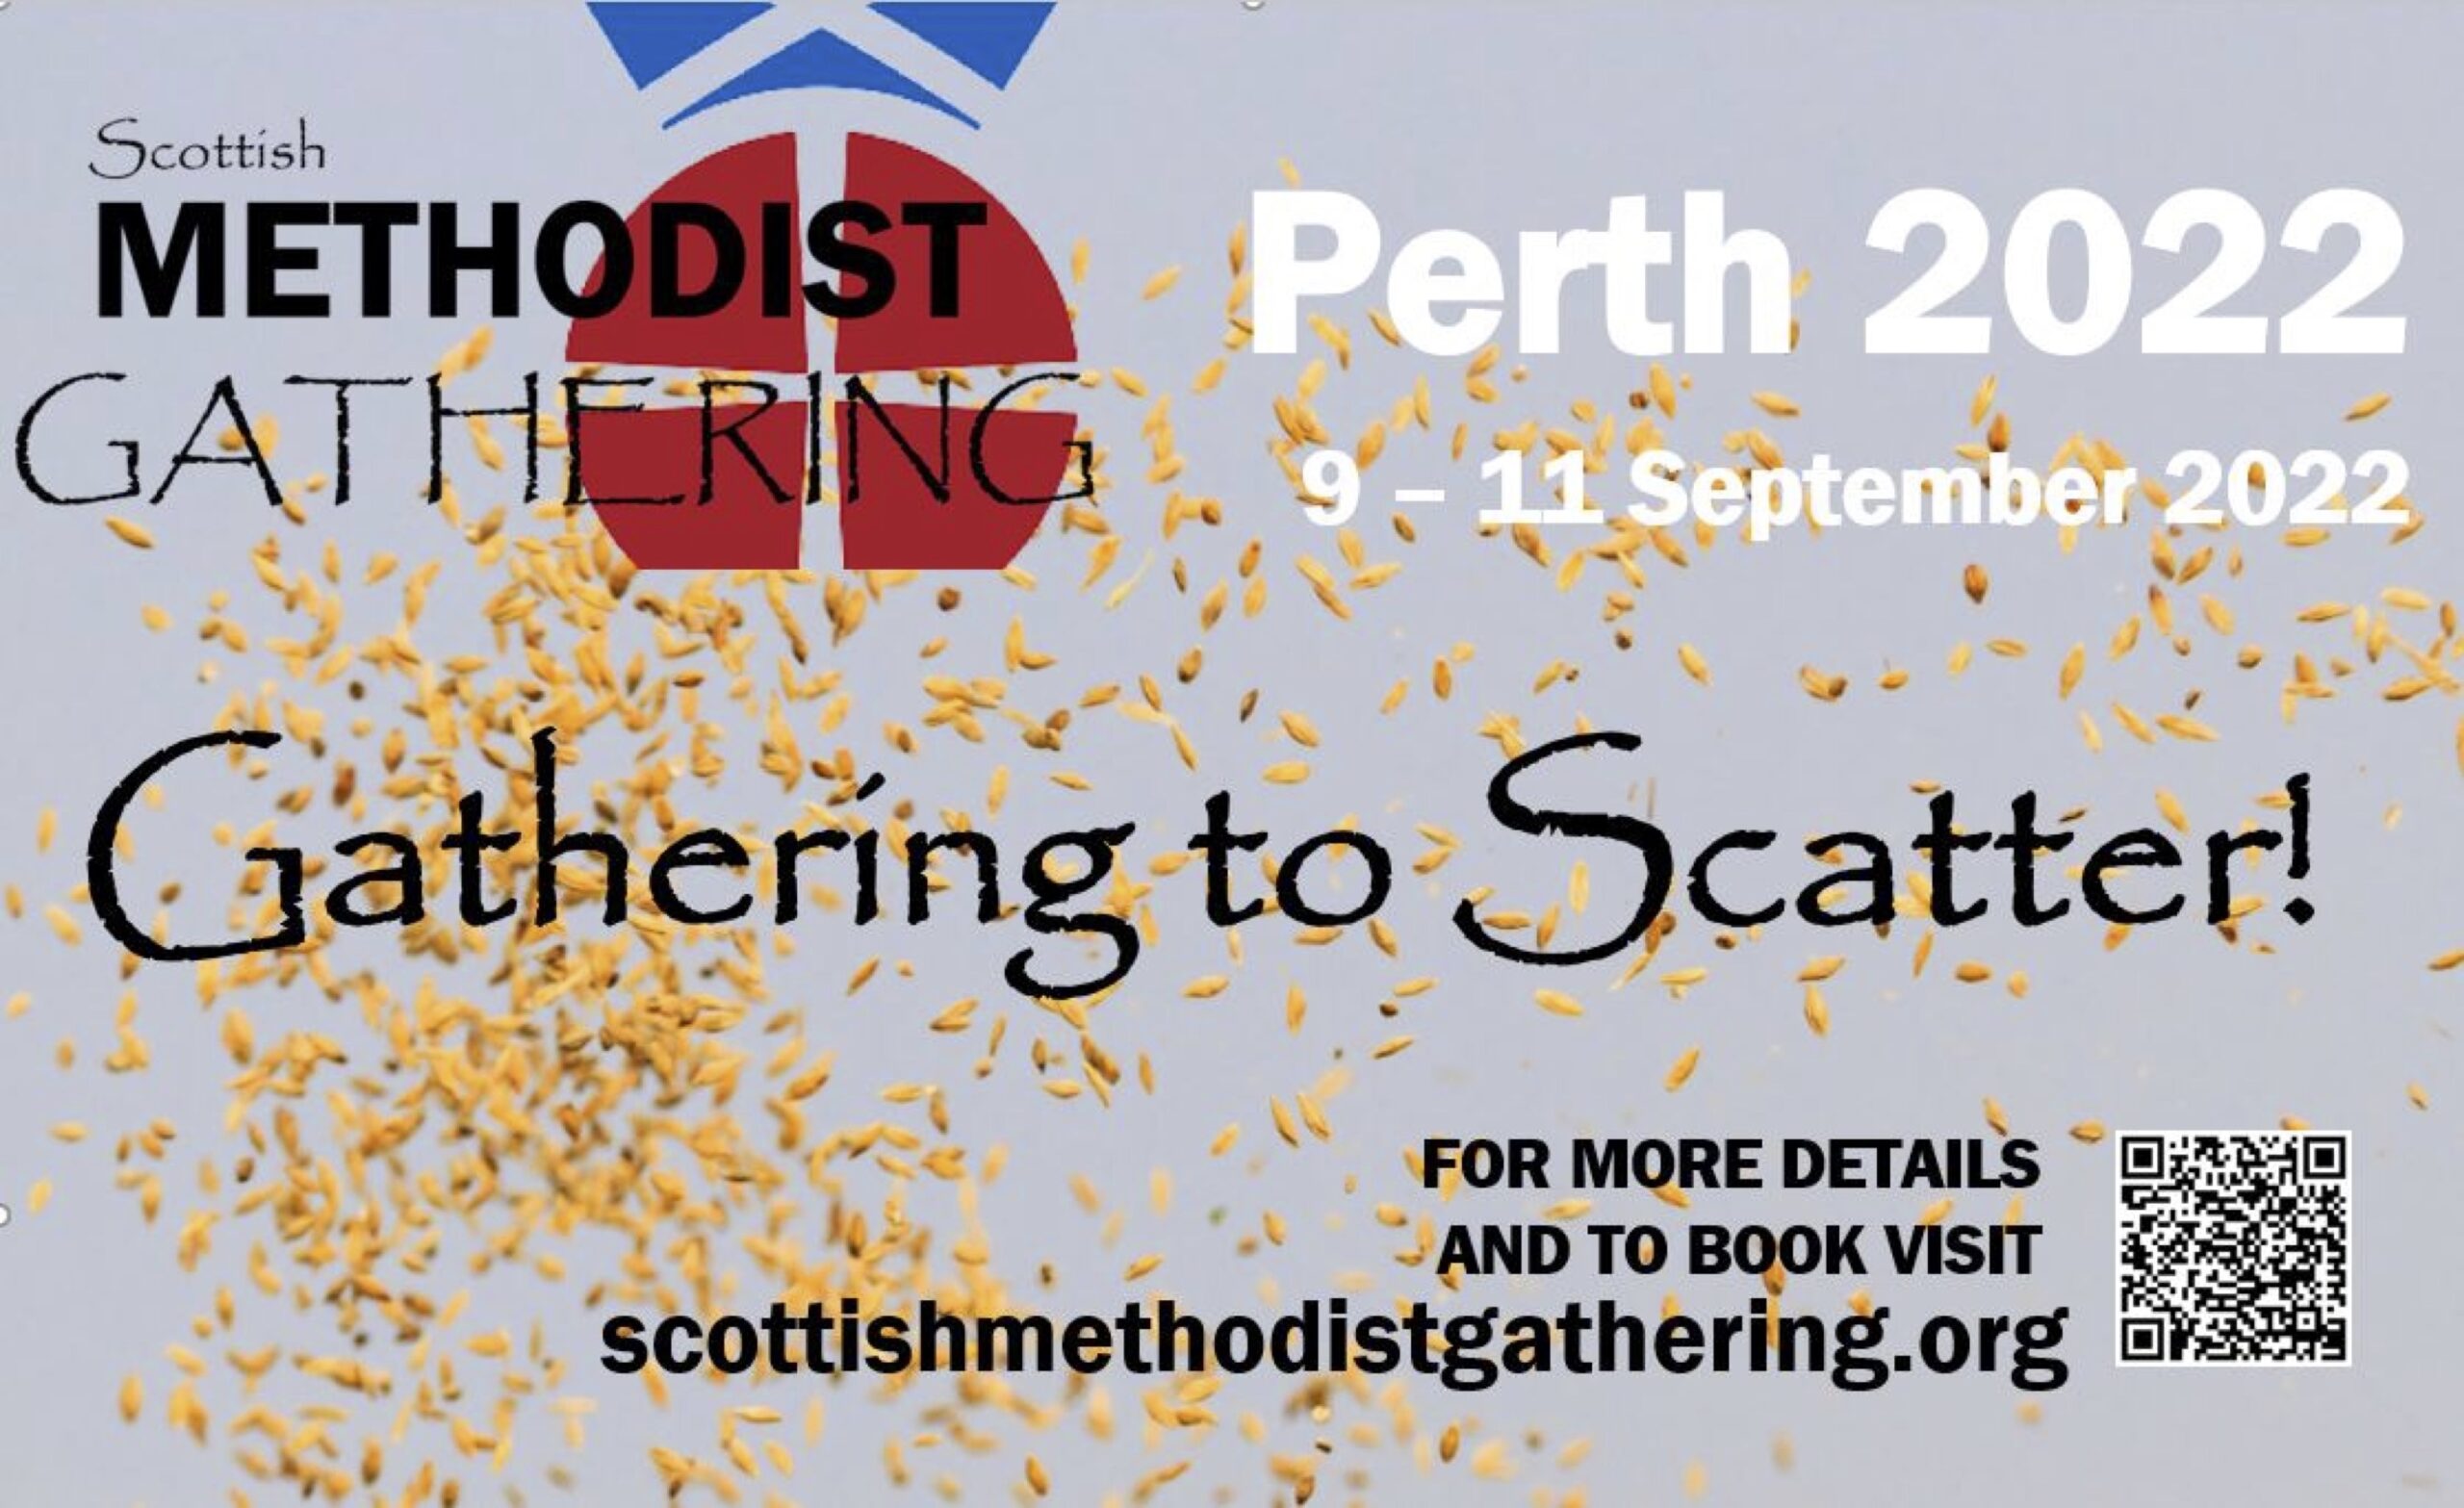 Poster for Scottish Methodist Gathering